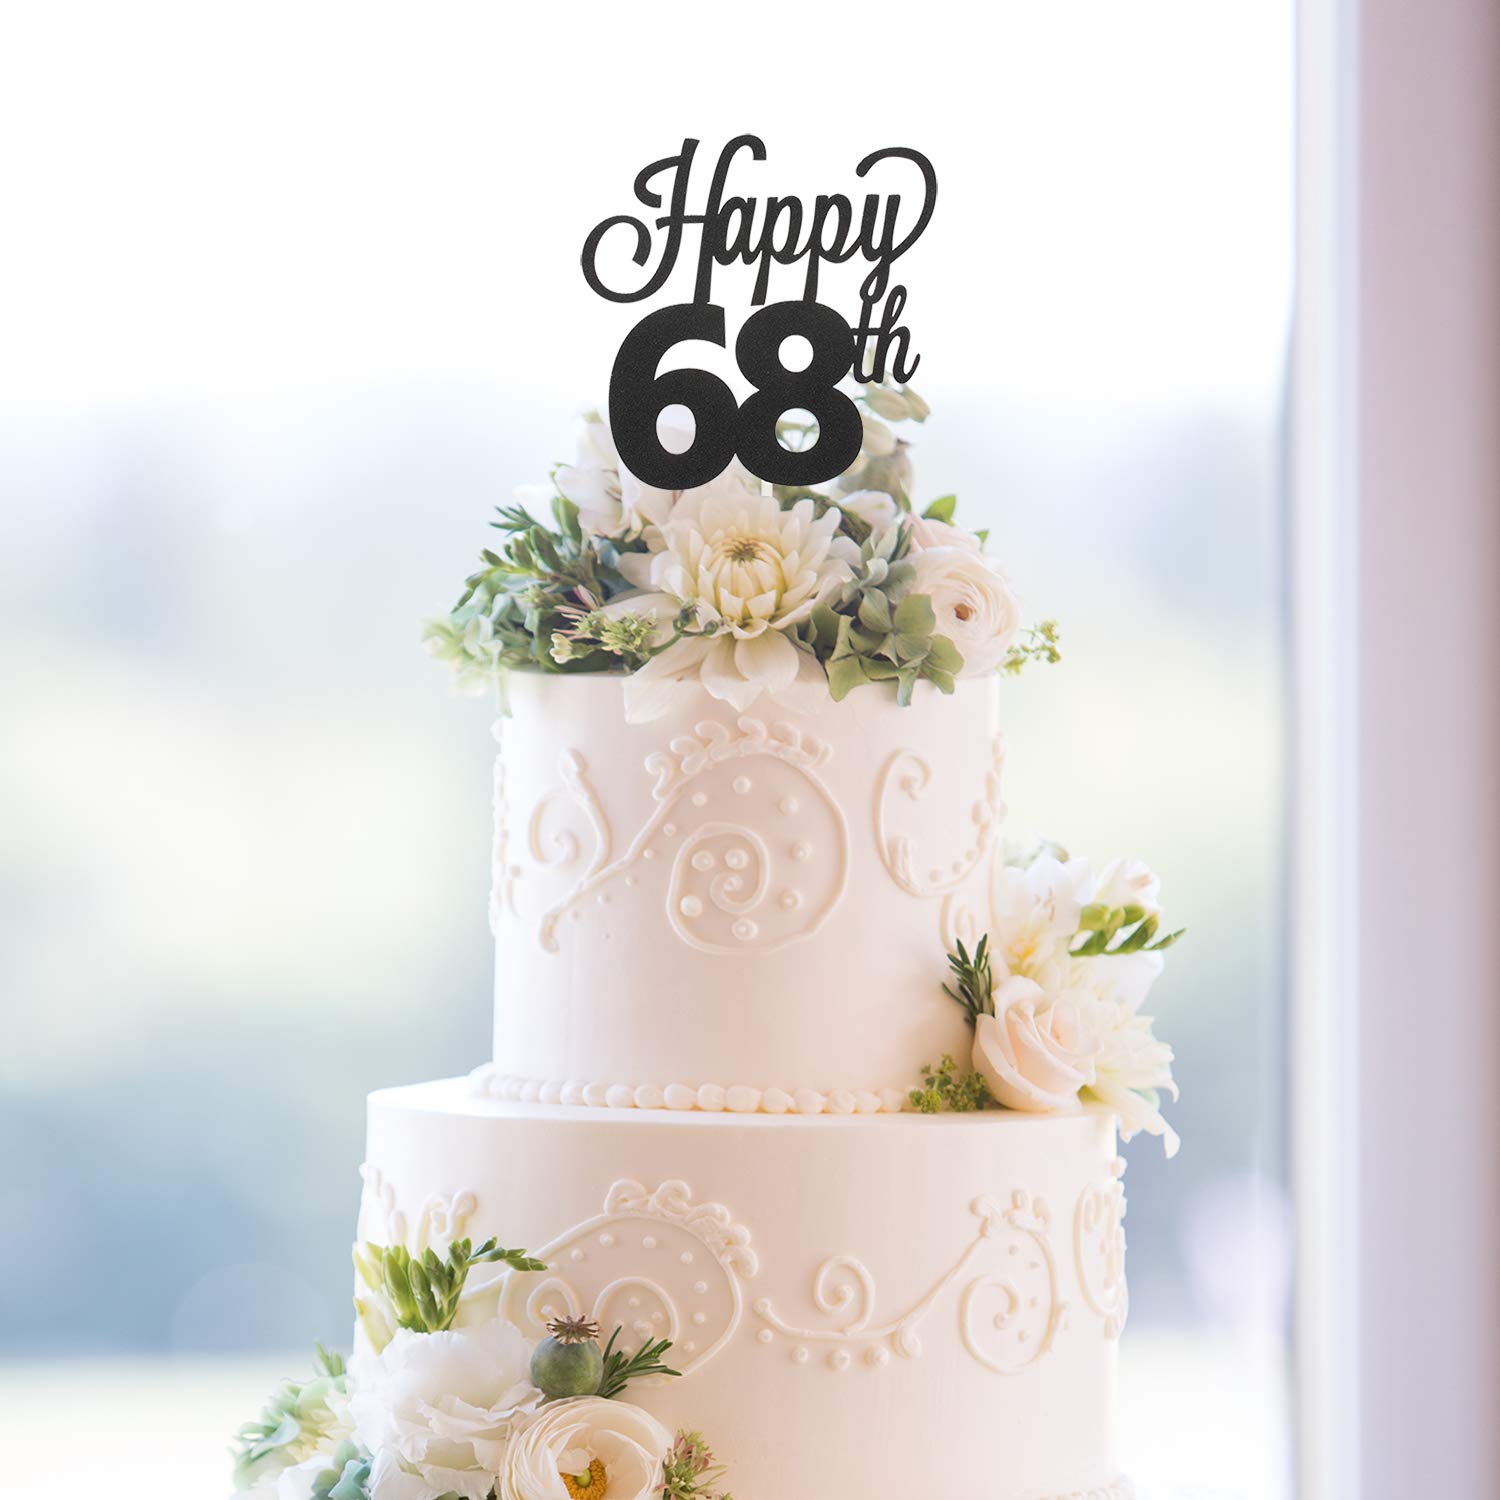 Rose Gold Glitter Happy 68th Birthday Cake Topper - Indonesia | Ubuy